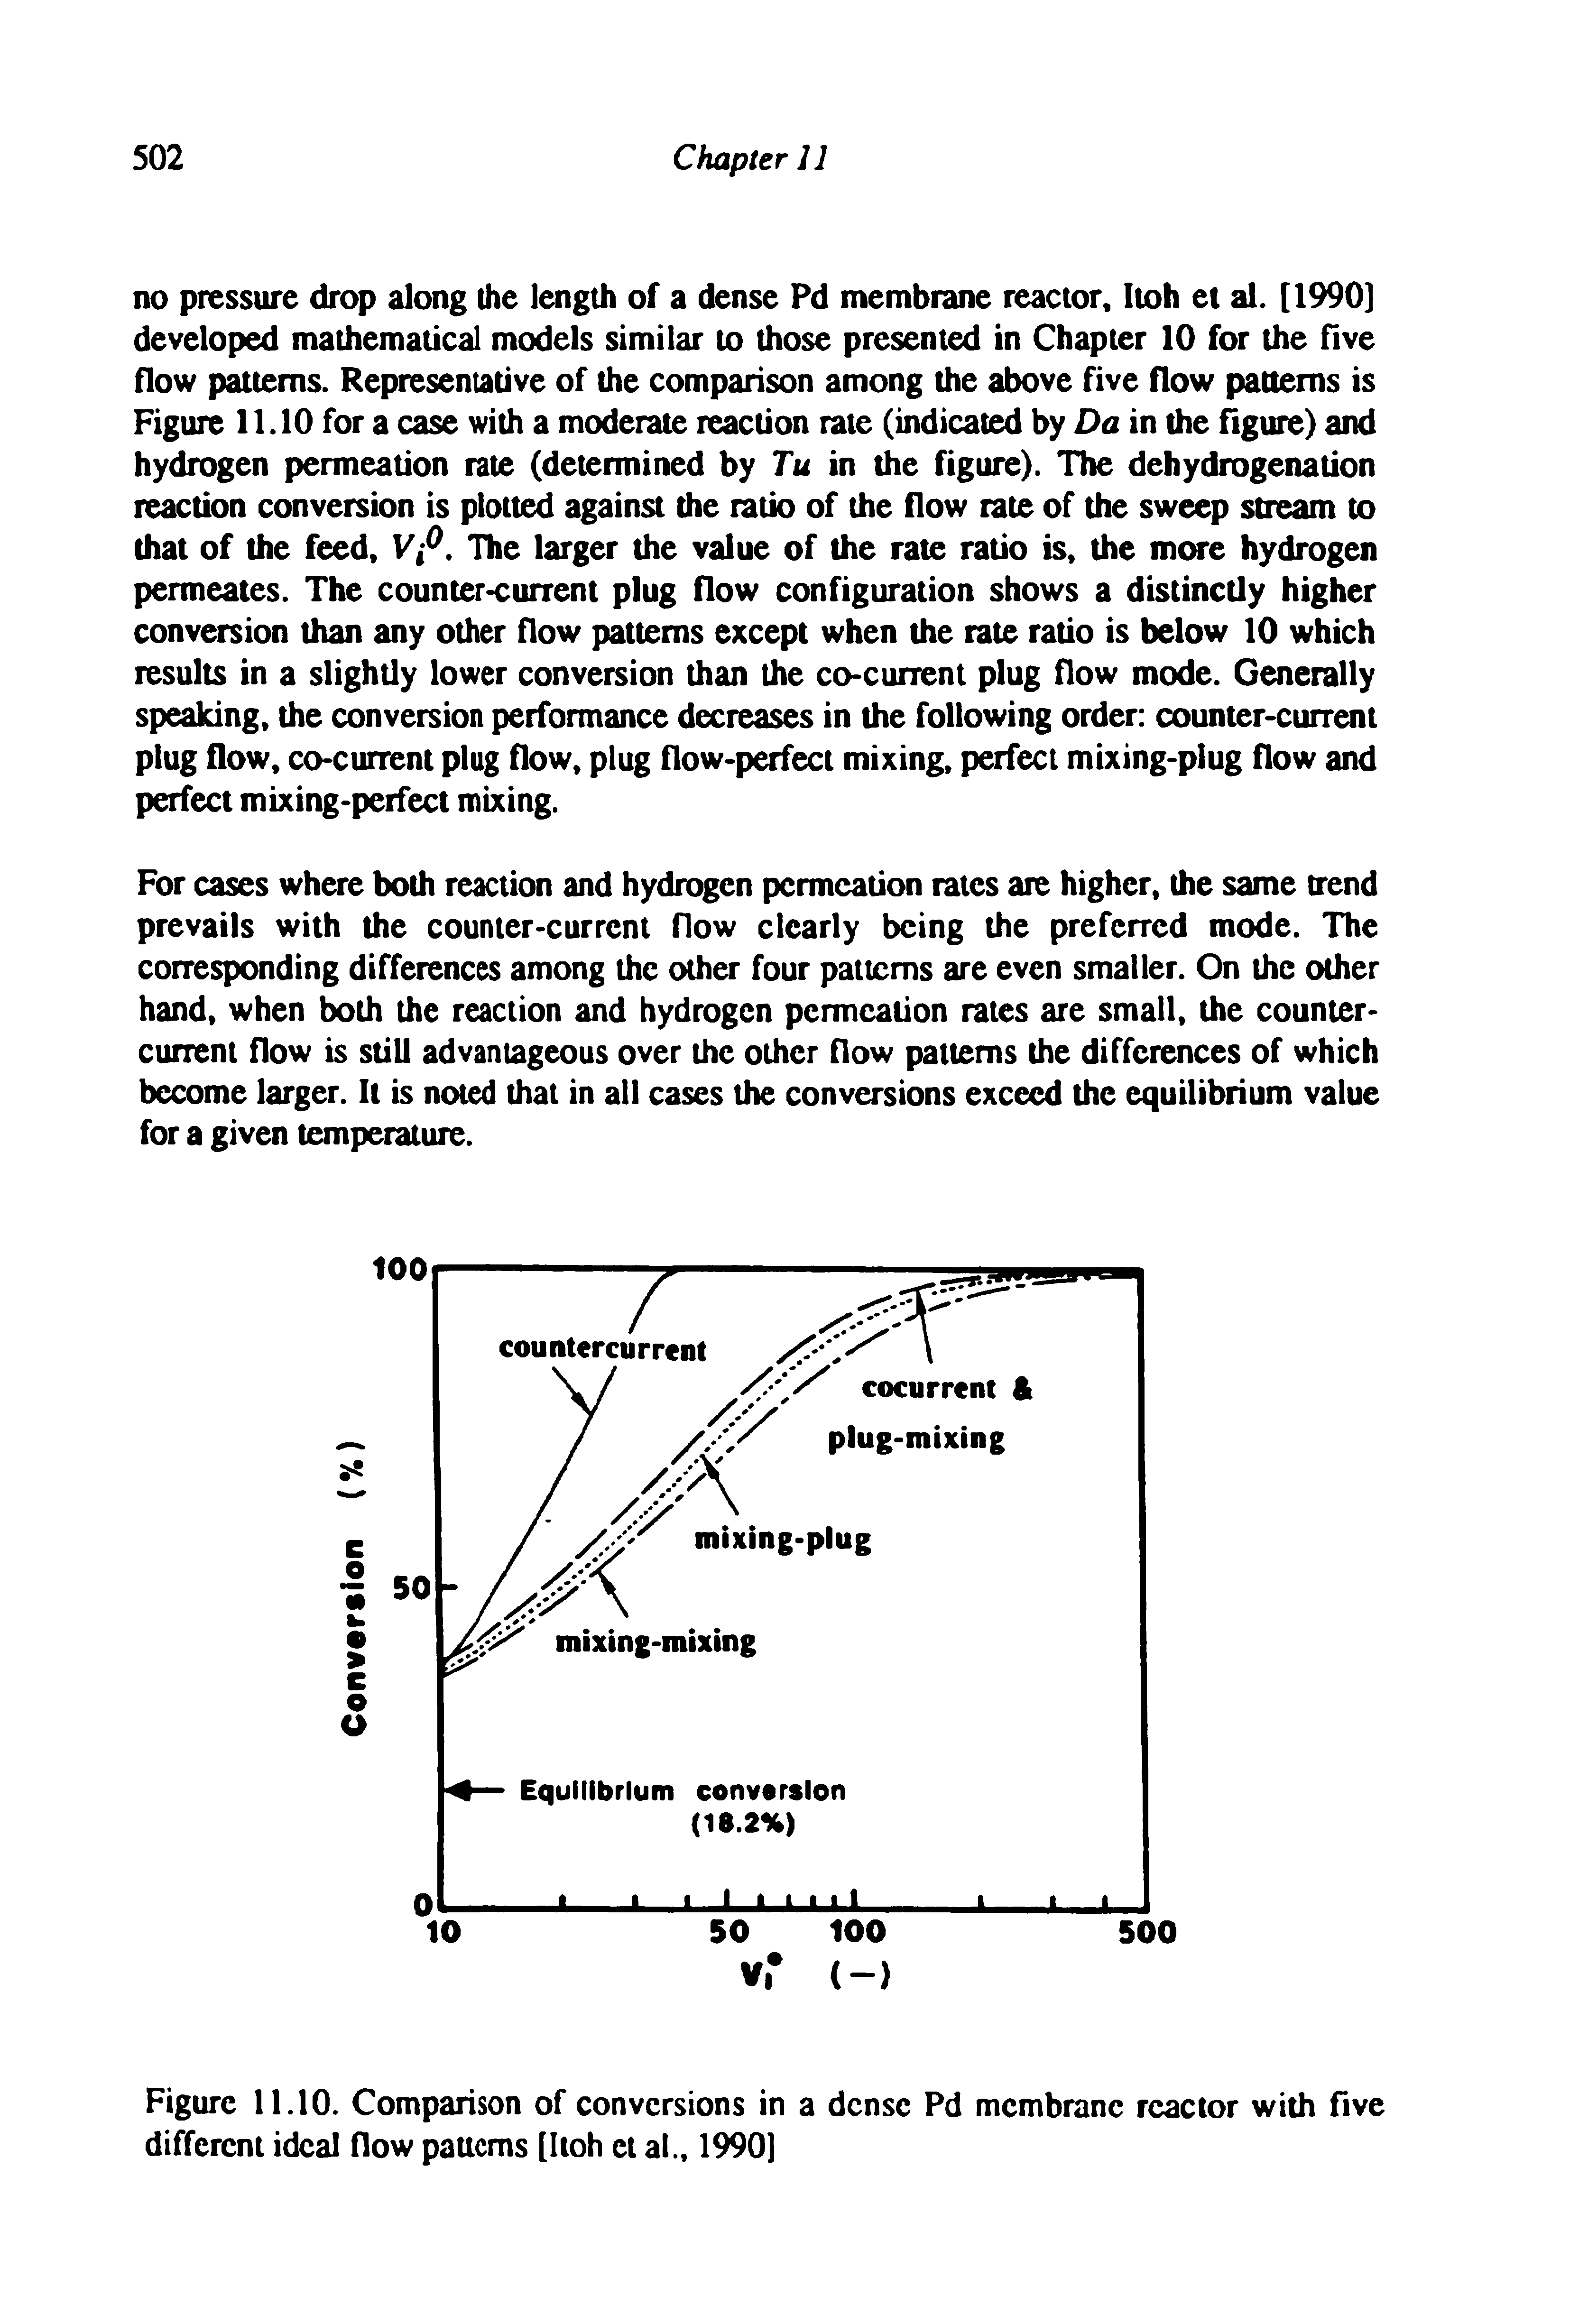 Figure 11.10. Comparison of conversions in a dense Pd membrane reactor with five different ideal flow pauems [Itoh et al., 1990]...